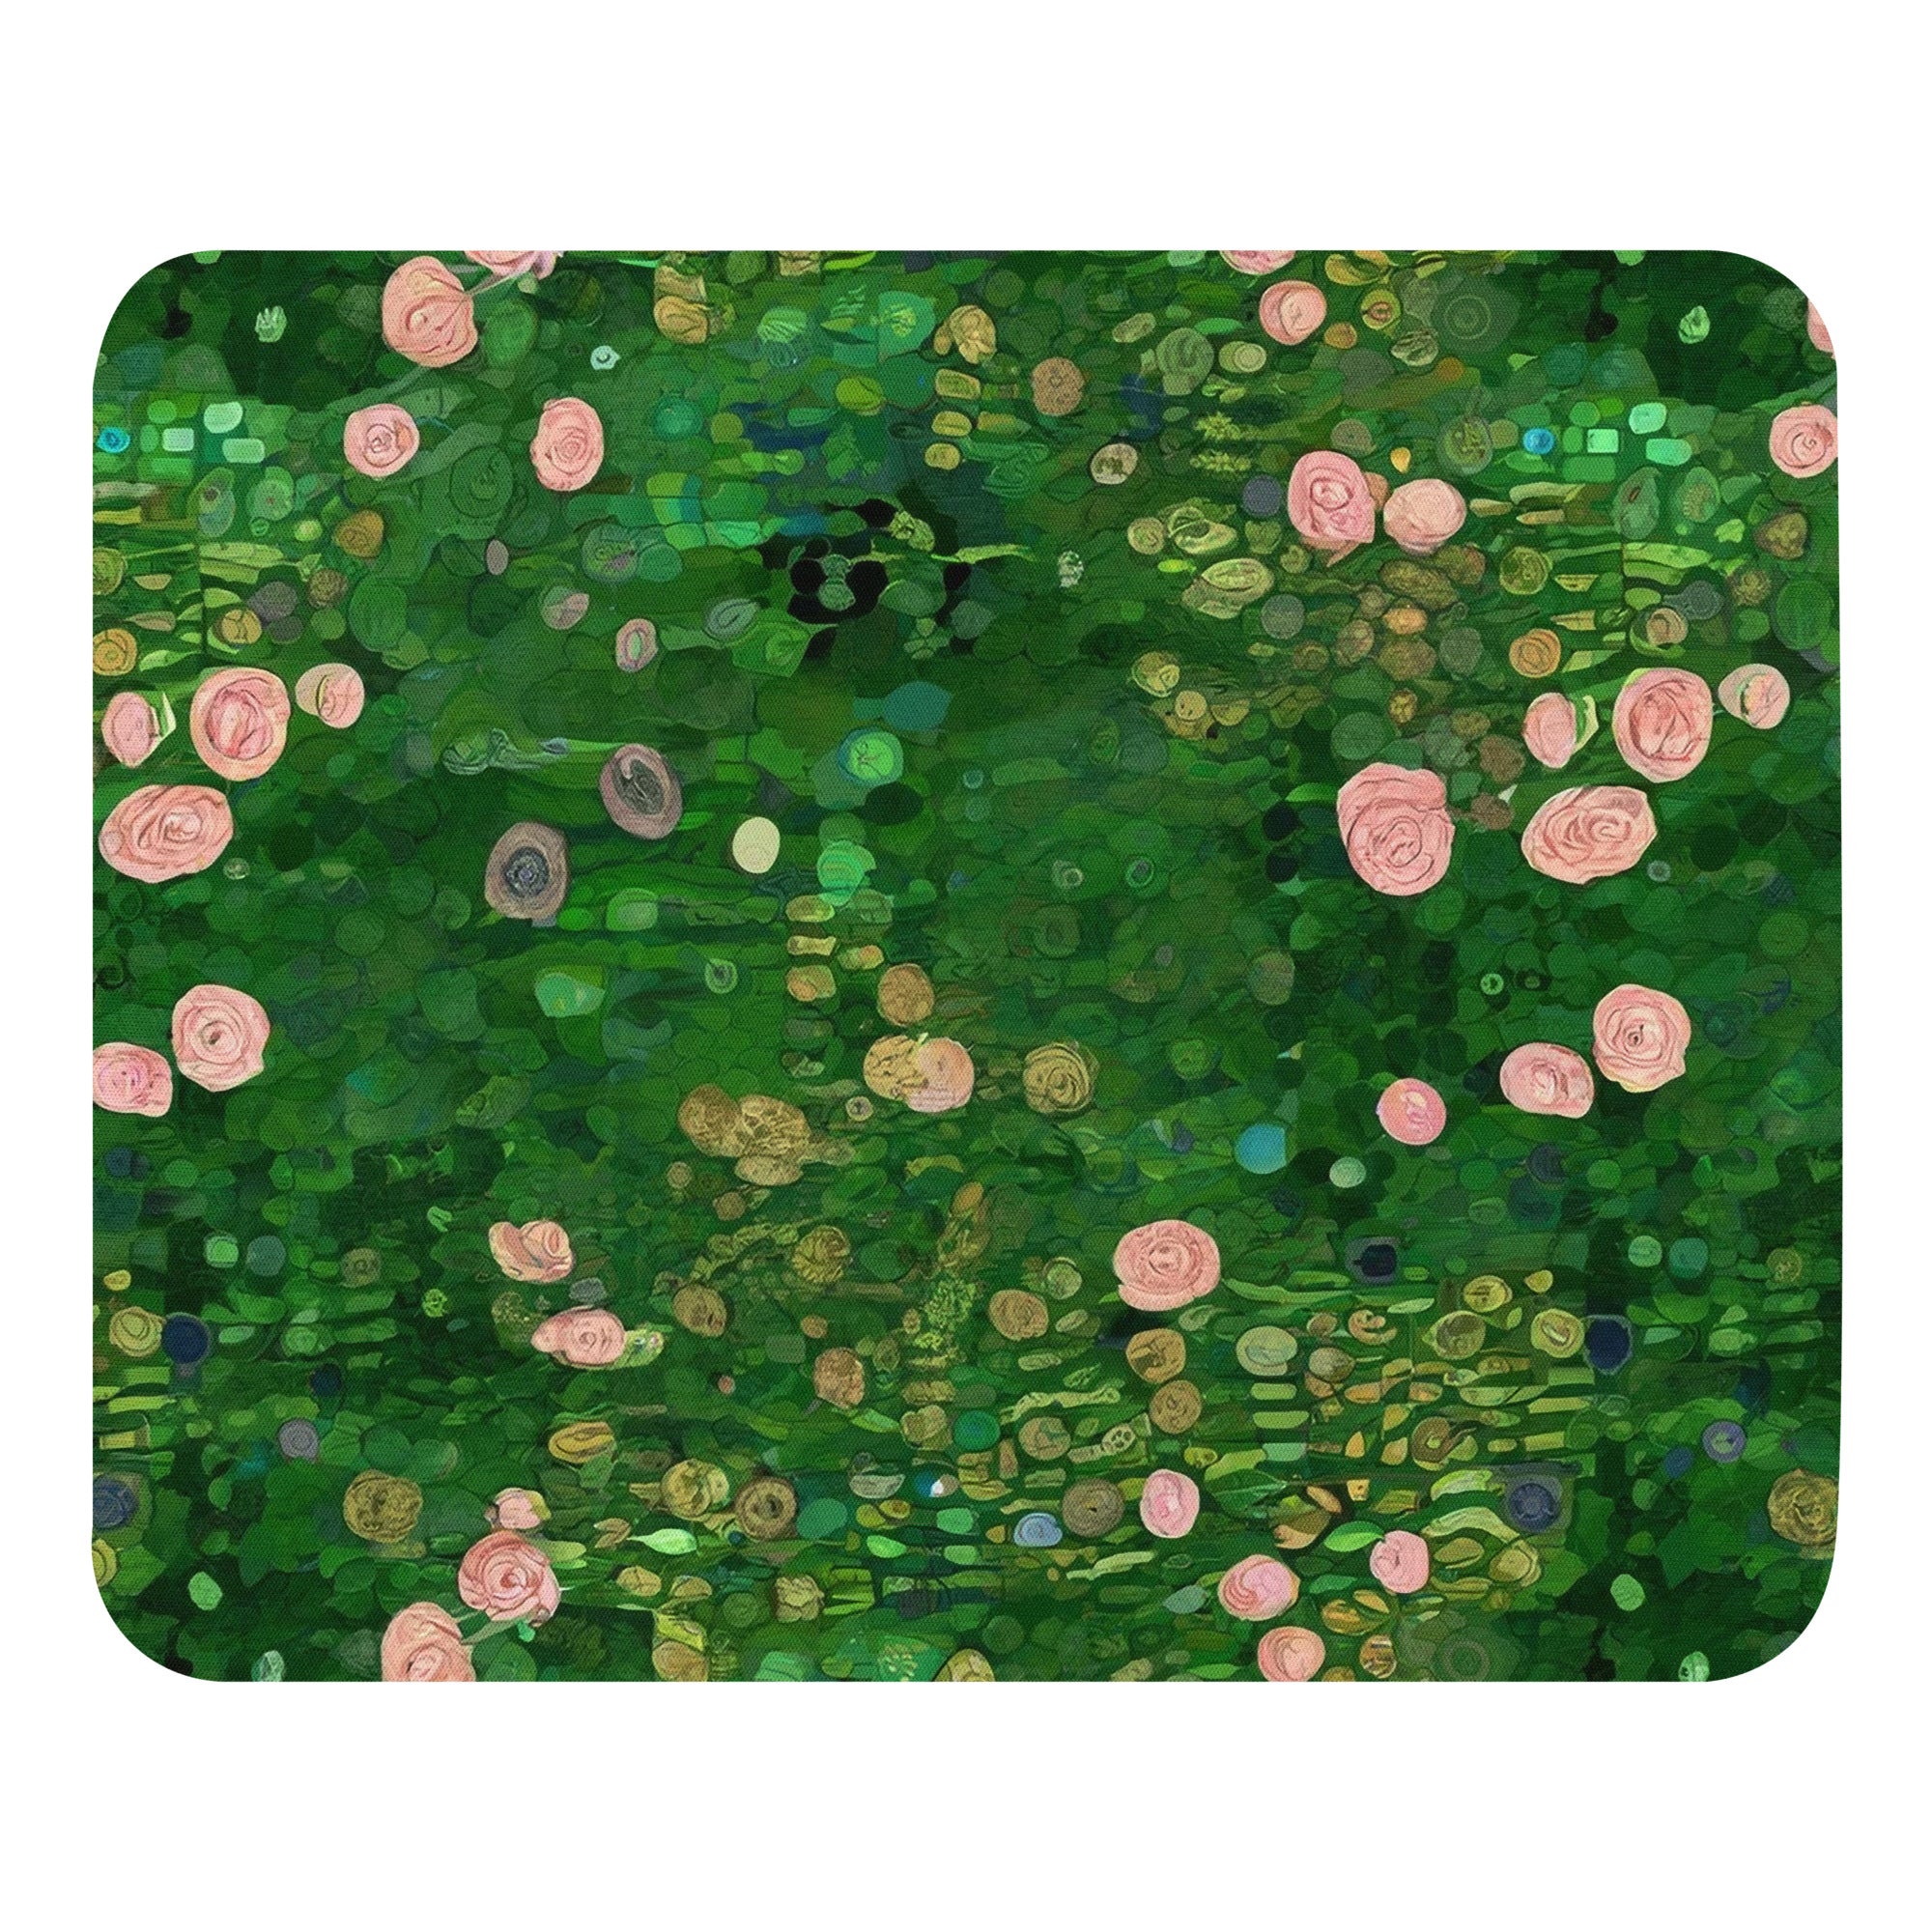 Gustav Klimt 'Rosebushes under the Trees' Famous Painting Mouse Pad | Premium Art Mouse Pad